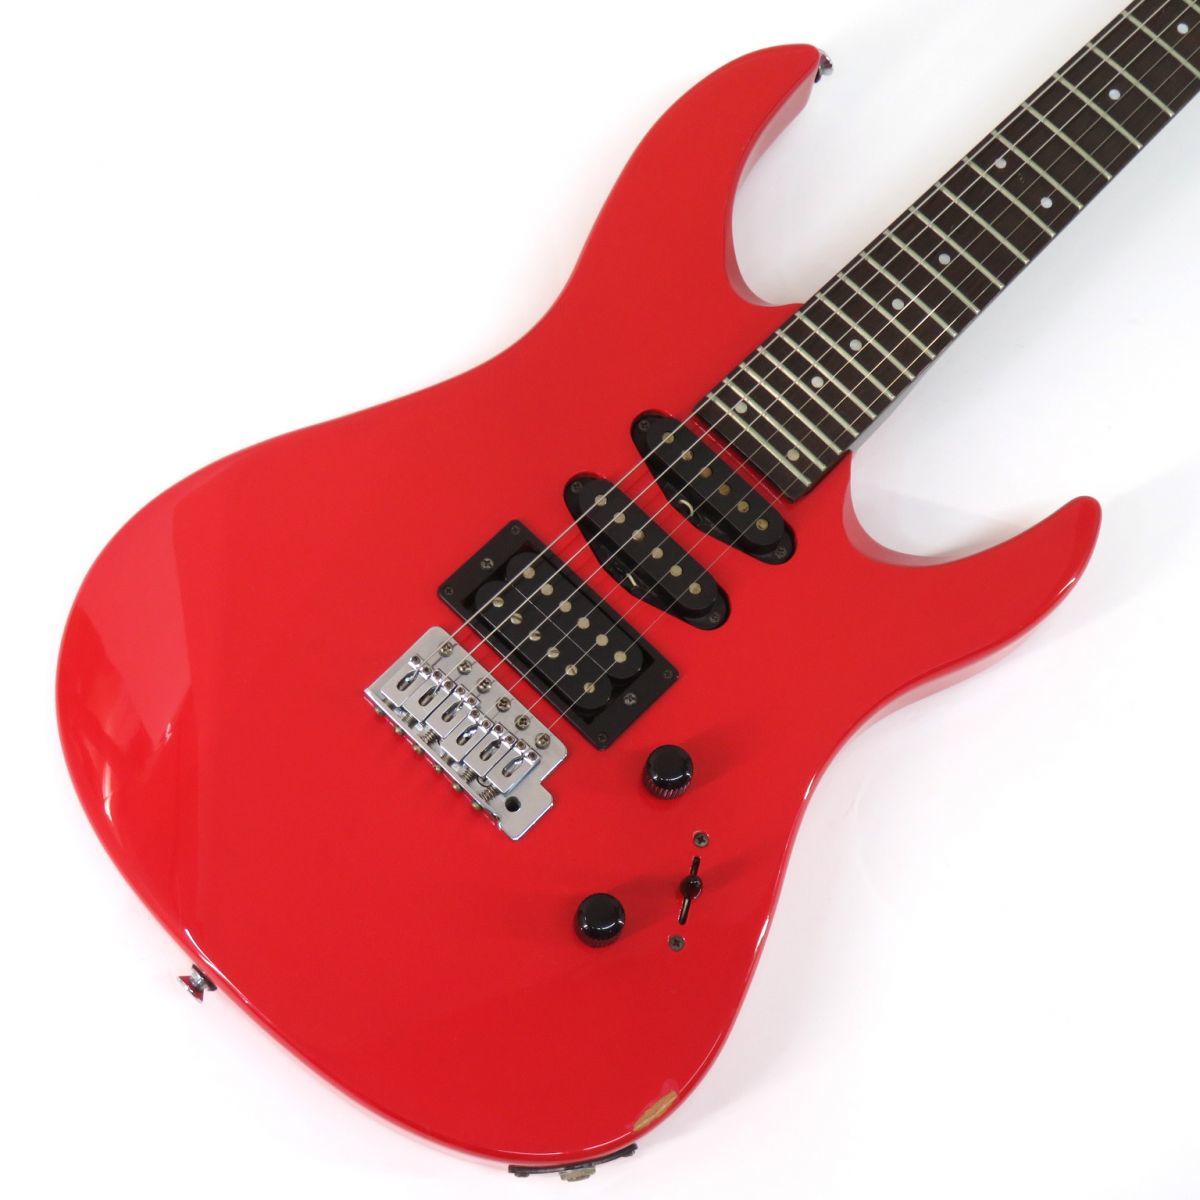 092s*YAMAHA Yamaha RGX112J red electric guitar * used 